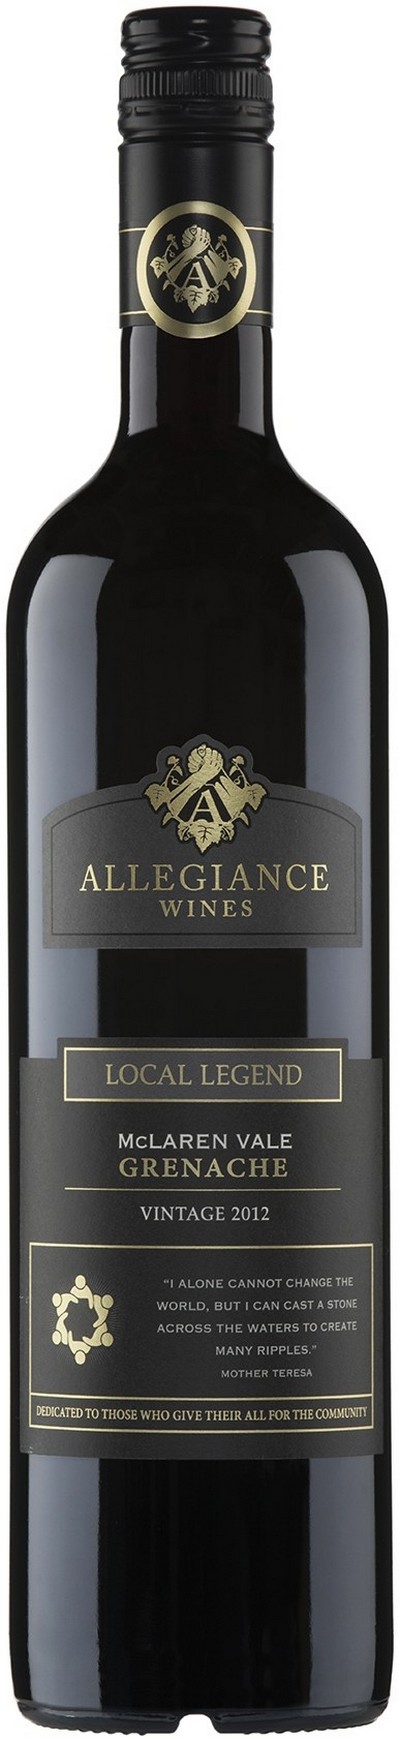 allegiance-wines-local-legend-mclaren-vale-grenache-2012